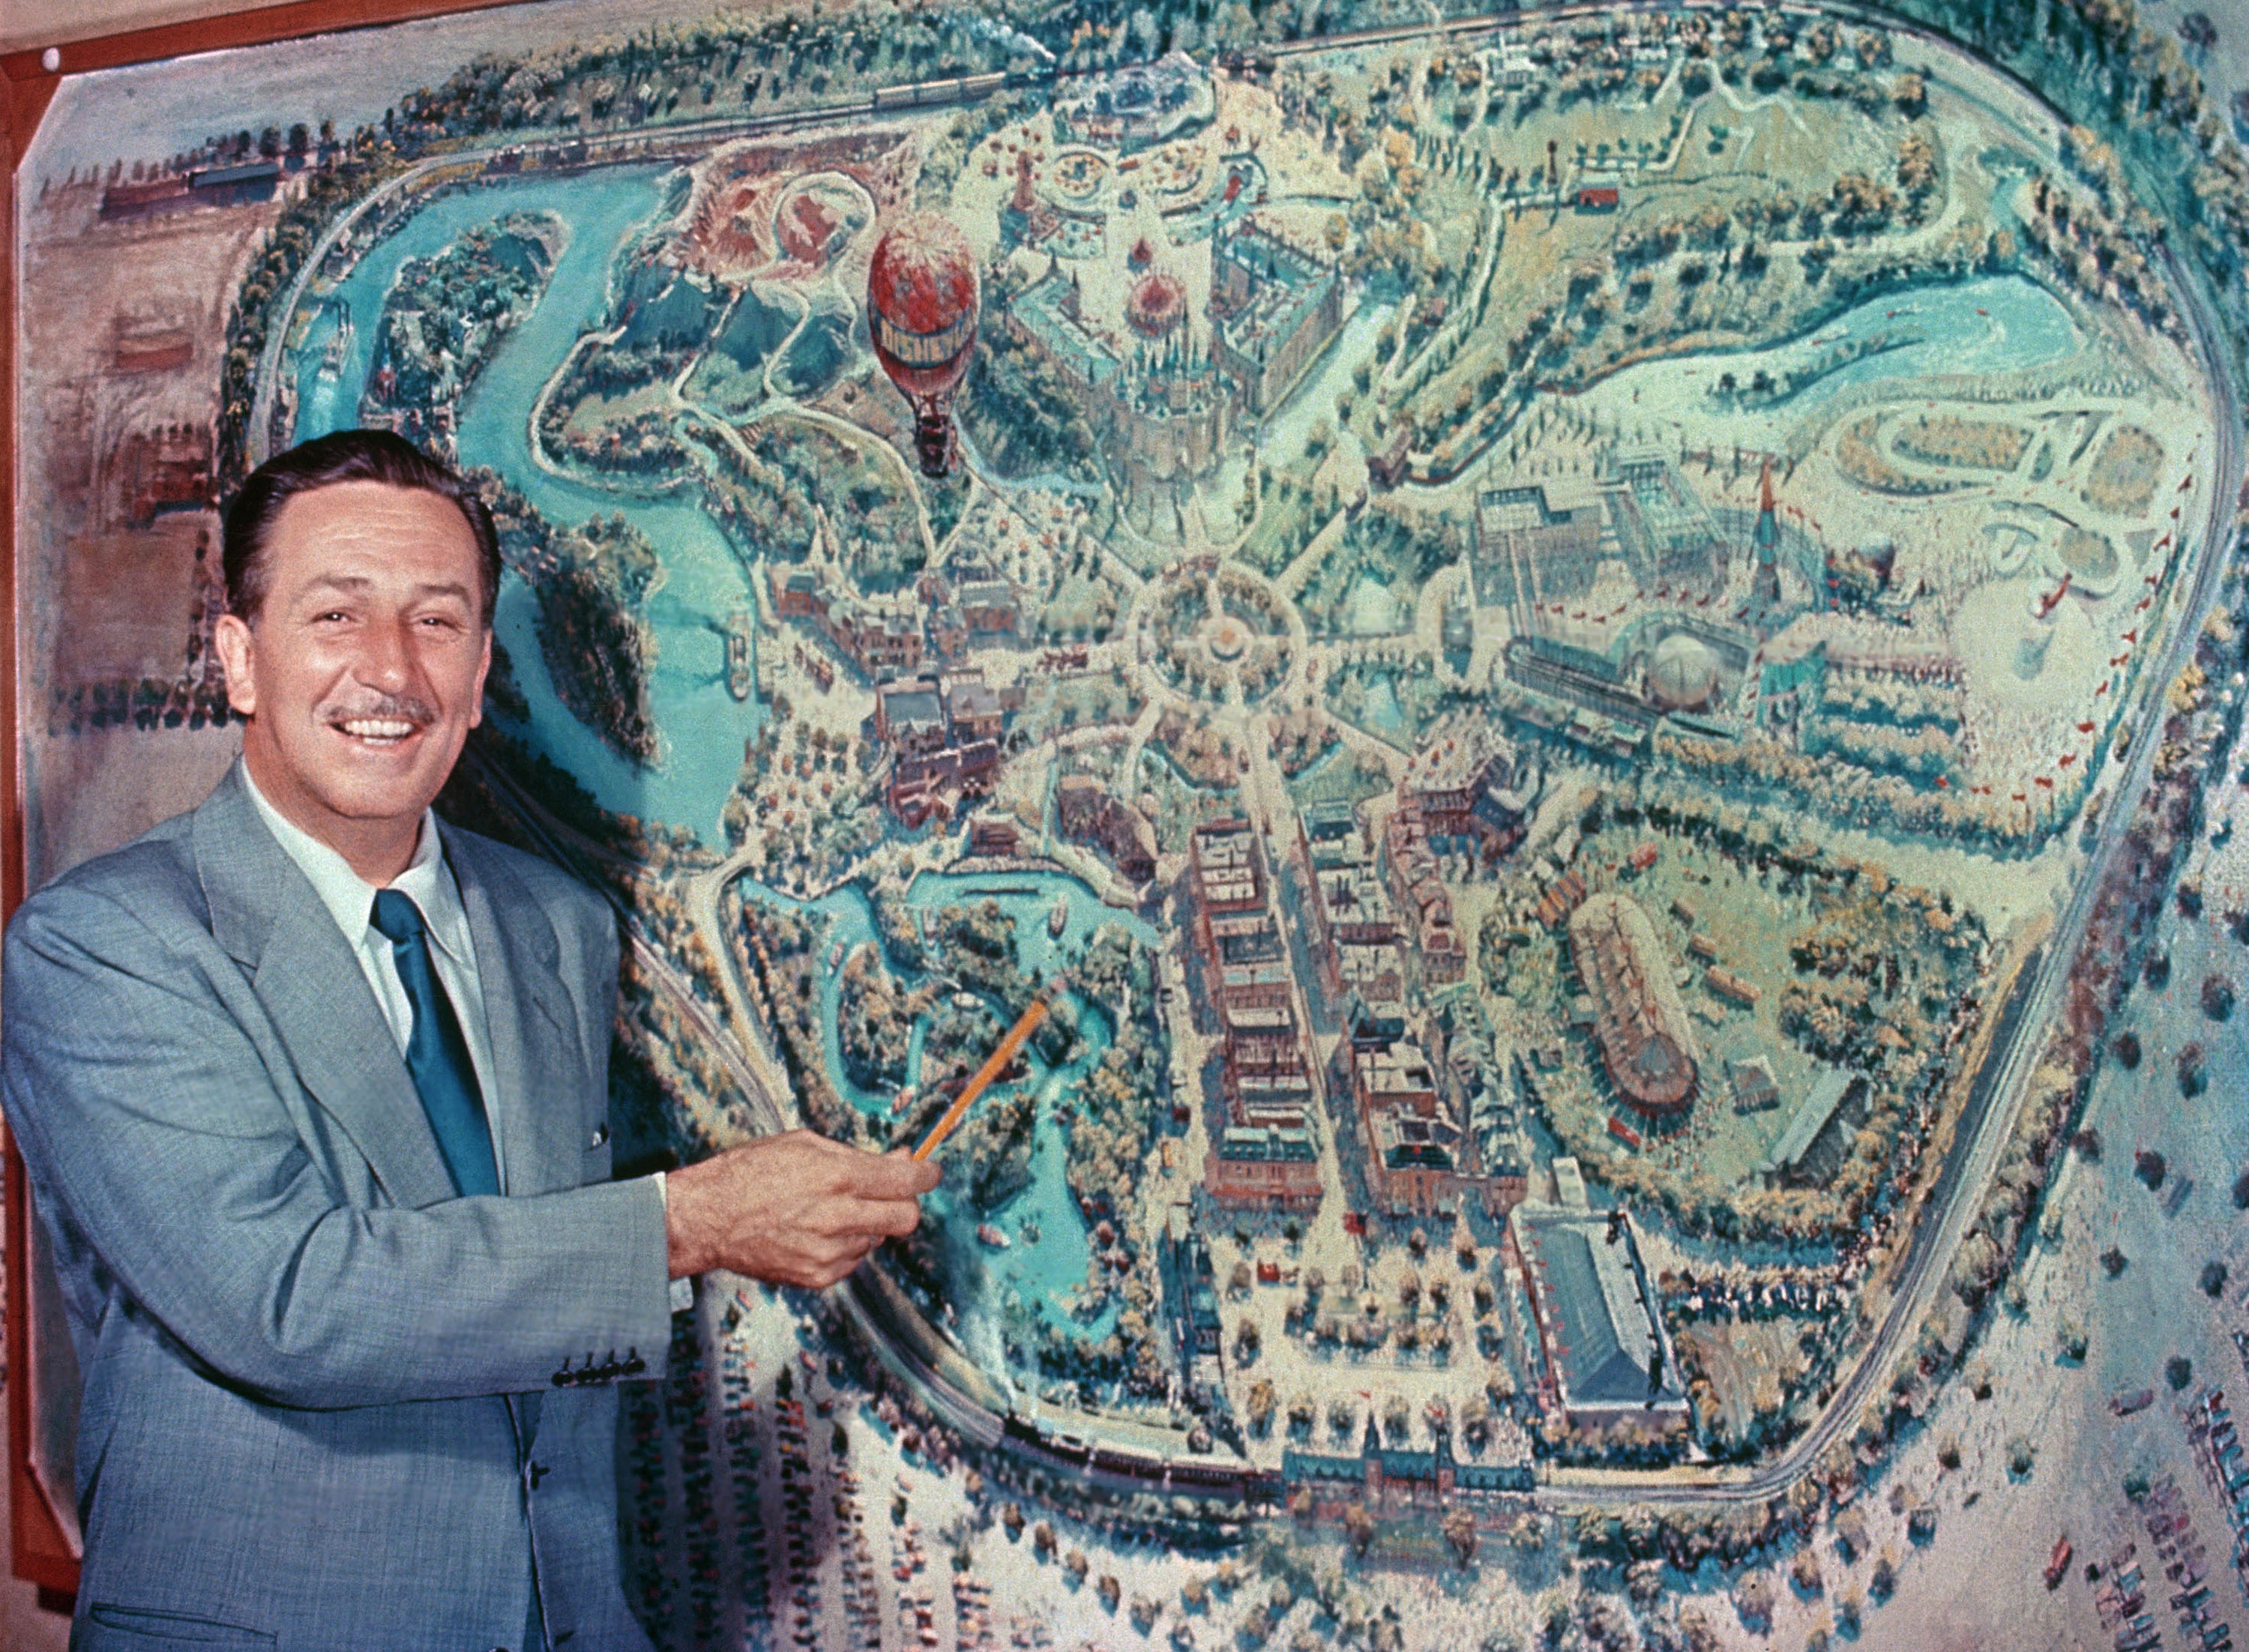 Walt Disney in front of a map of Disneyland, Anaheim